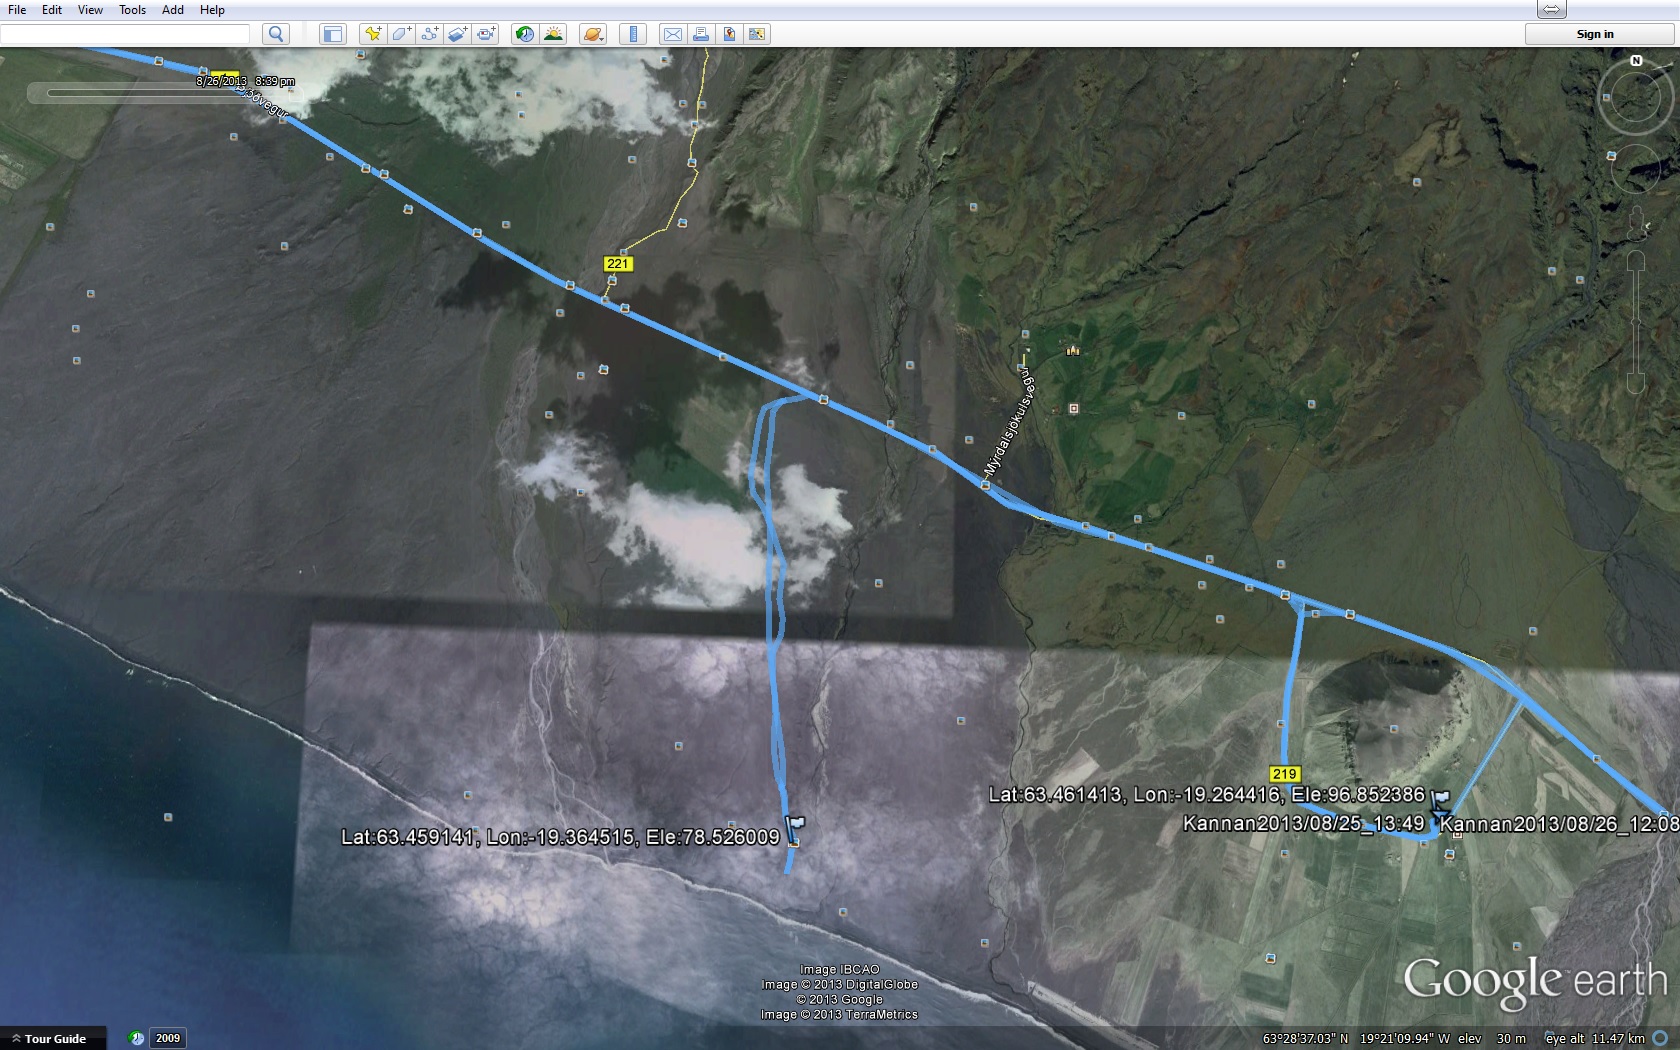 Google Earth view of plane crash site